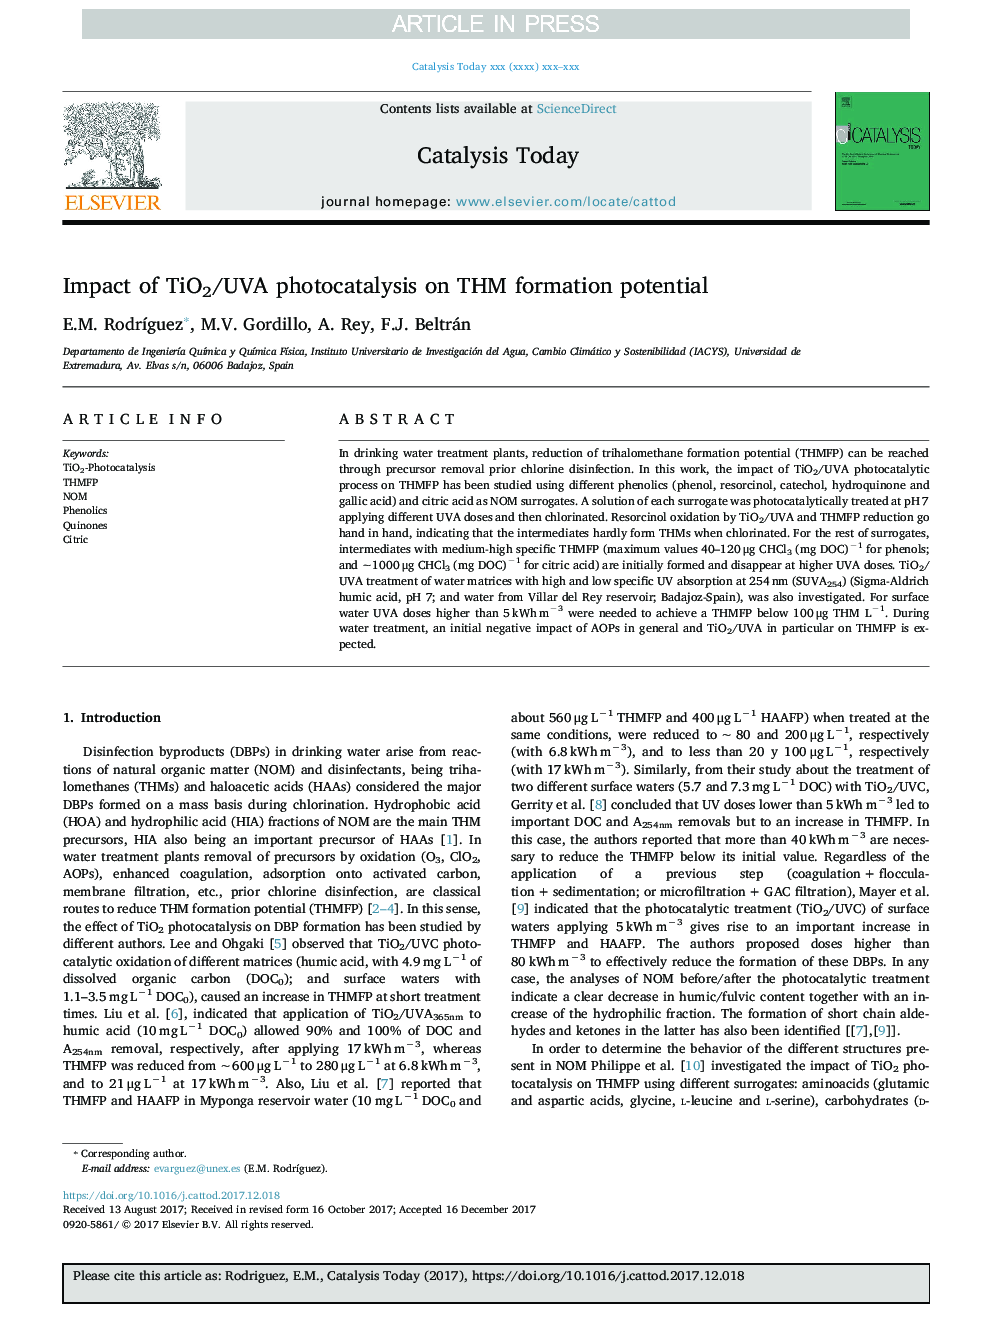 Impact of TiO2/UVA photocatalysis on THM formation potential